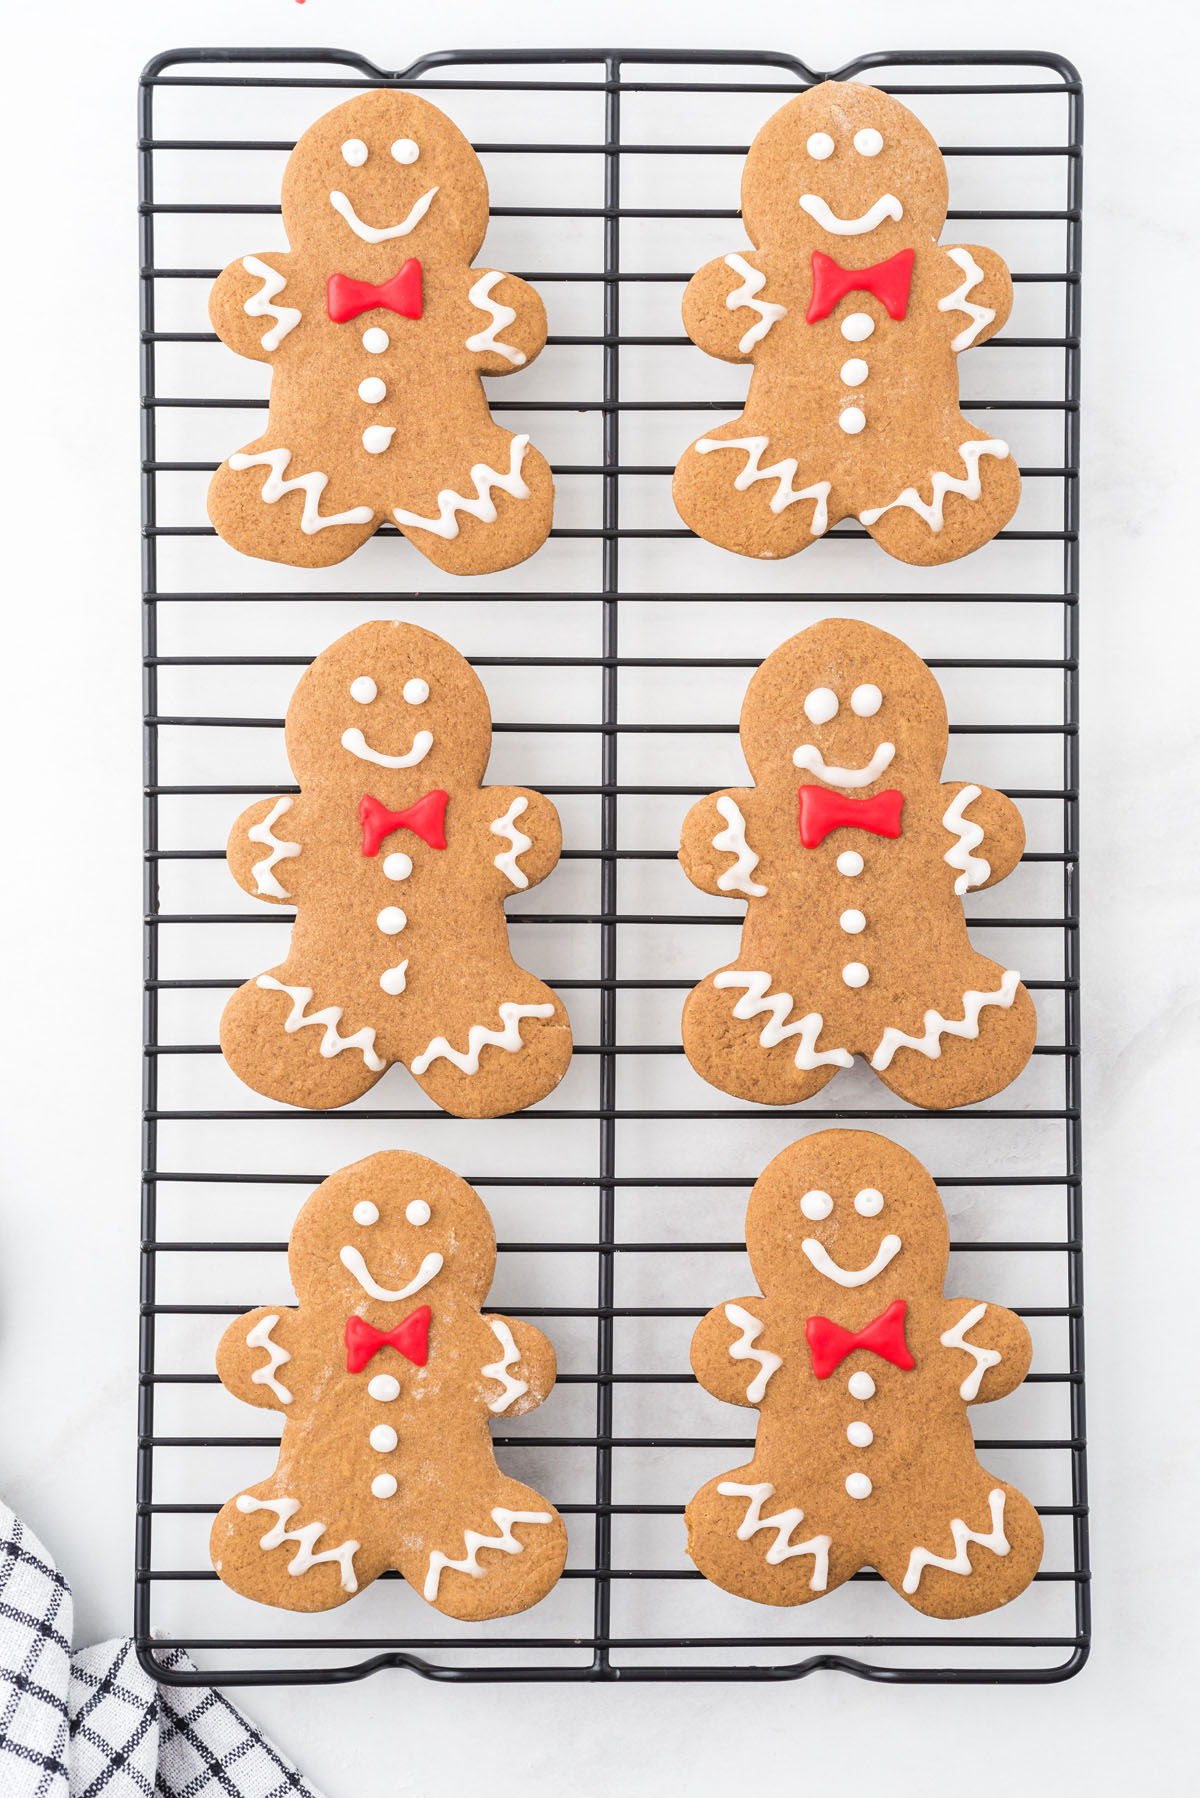 decorated gingerbread men cookies